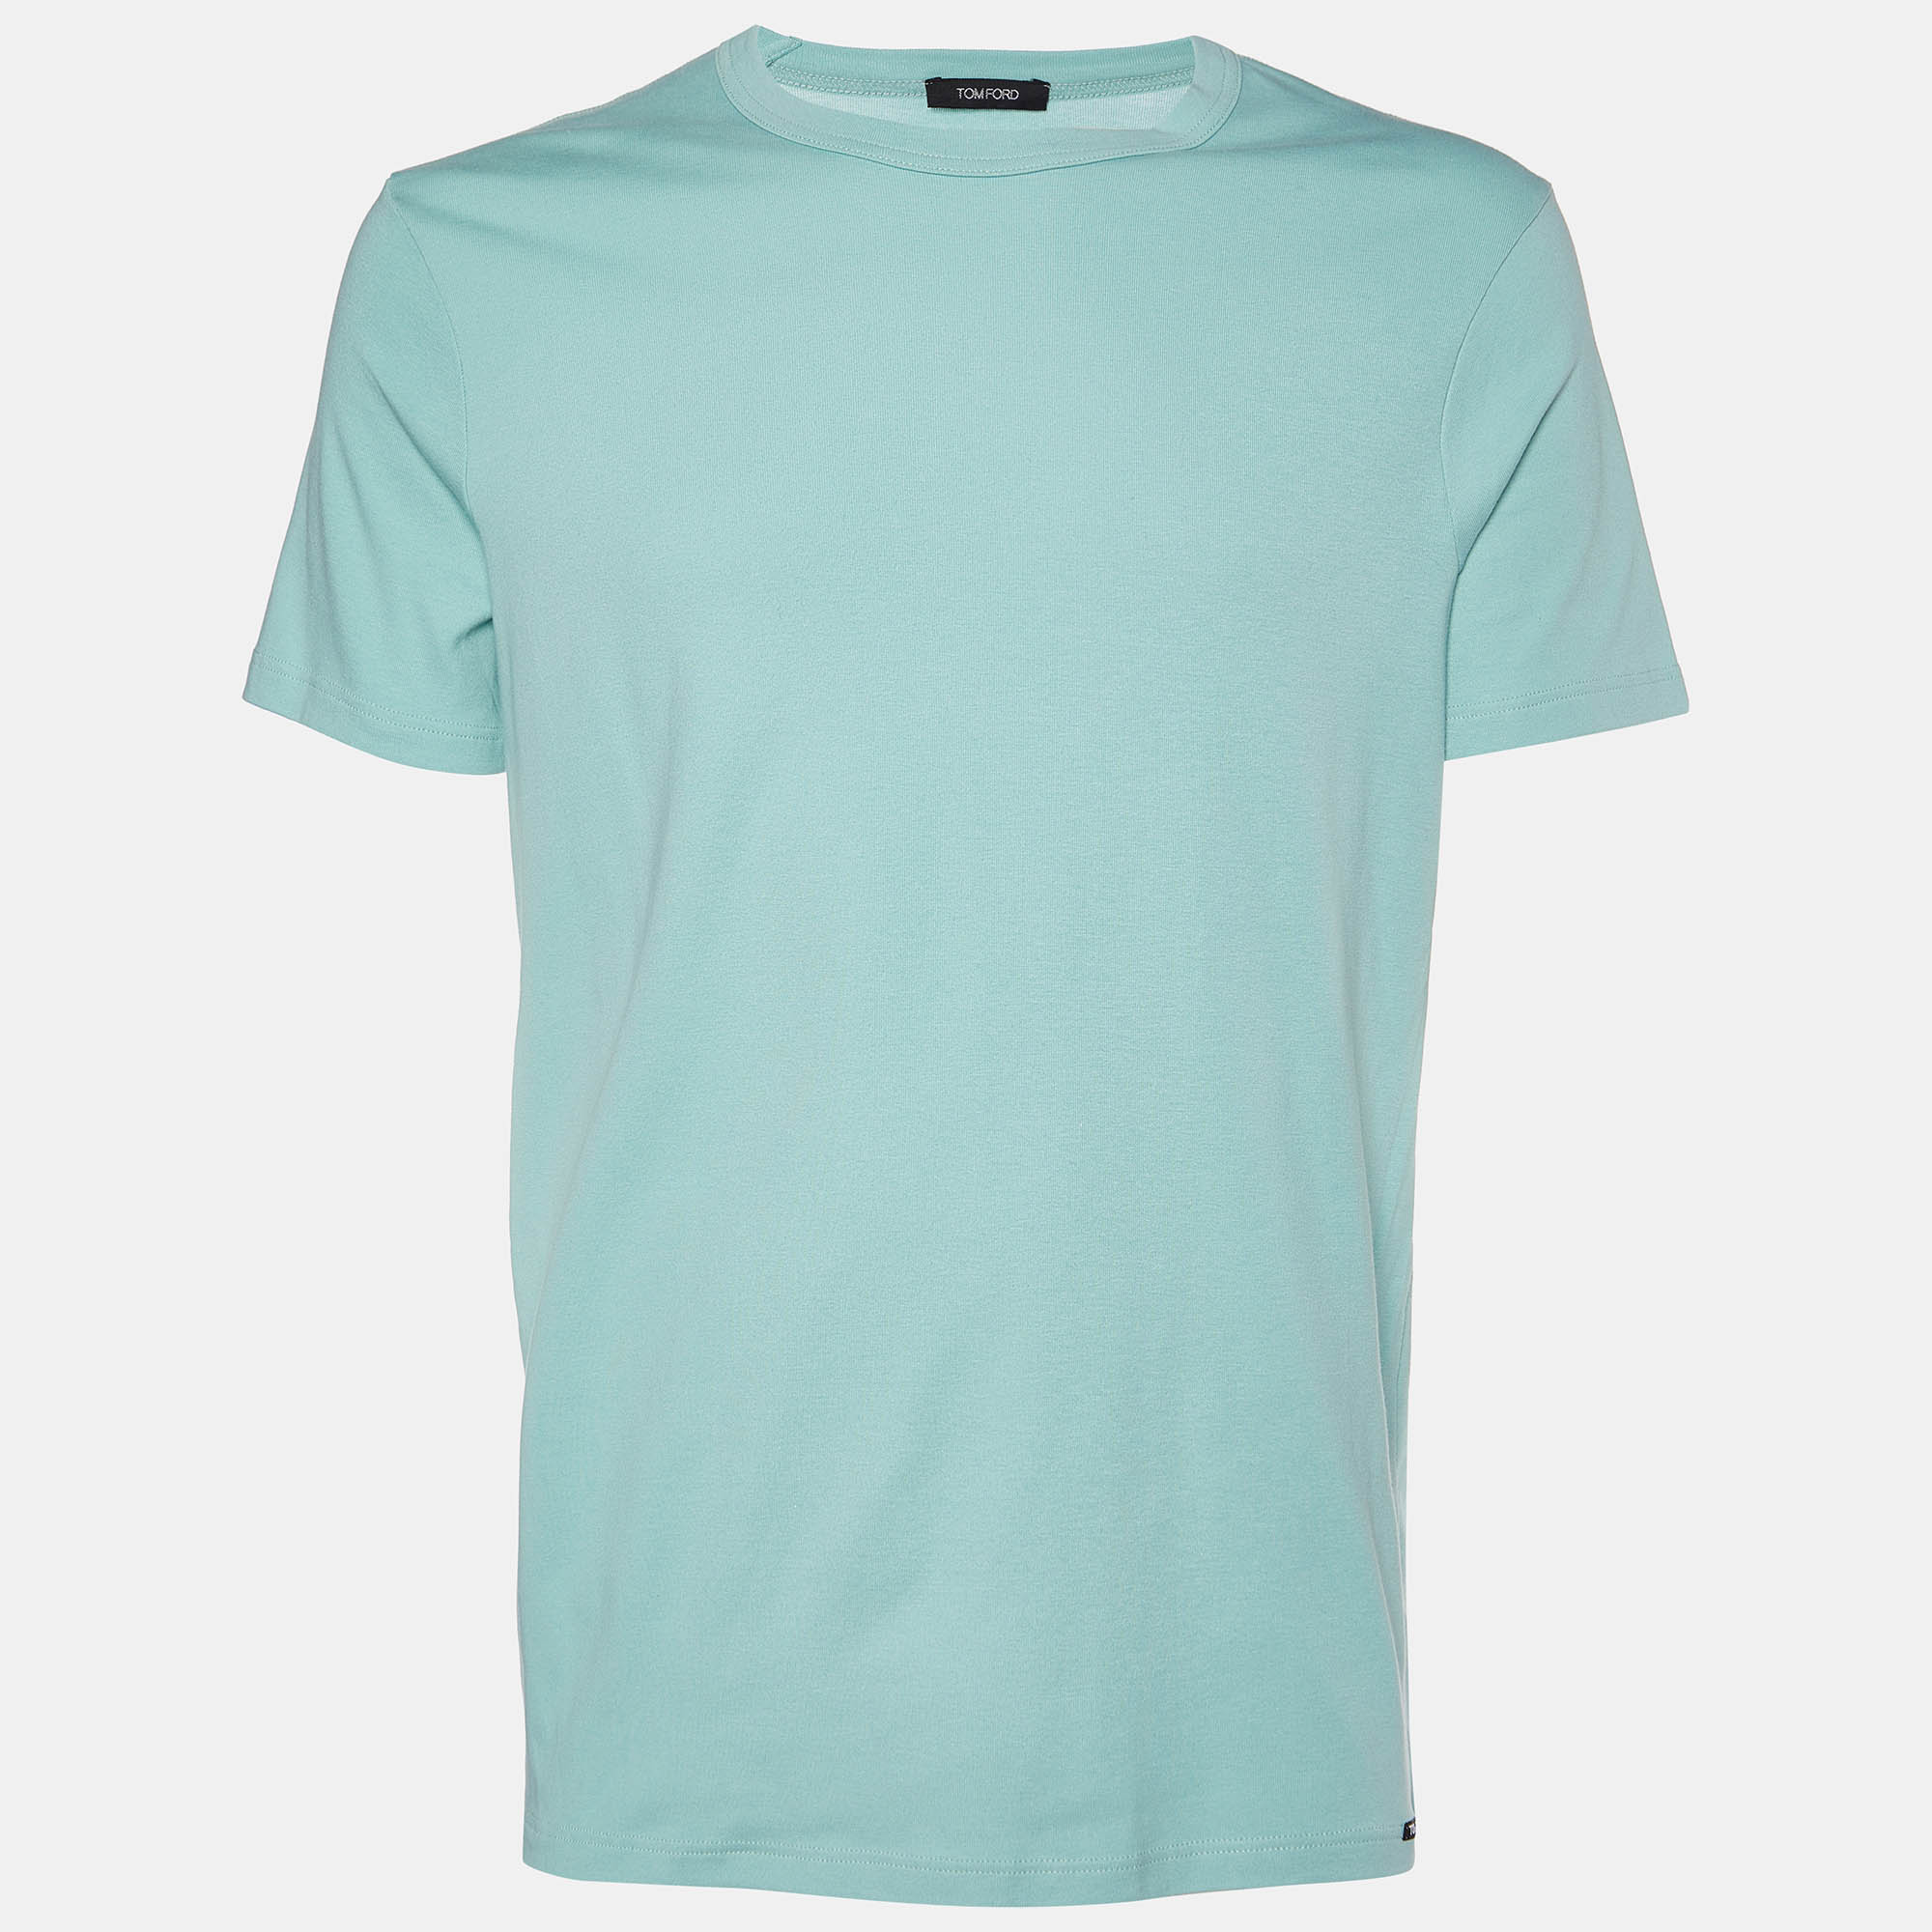 Tom ford green stretch cotton round neck t-shirt xxl